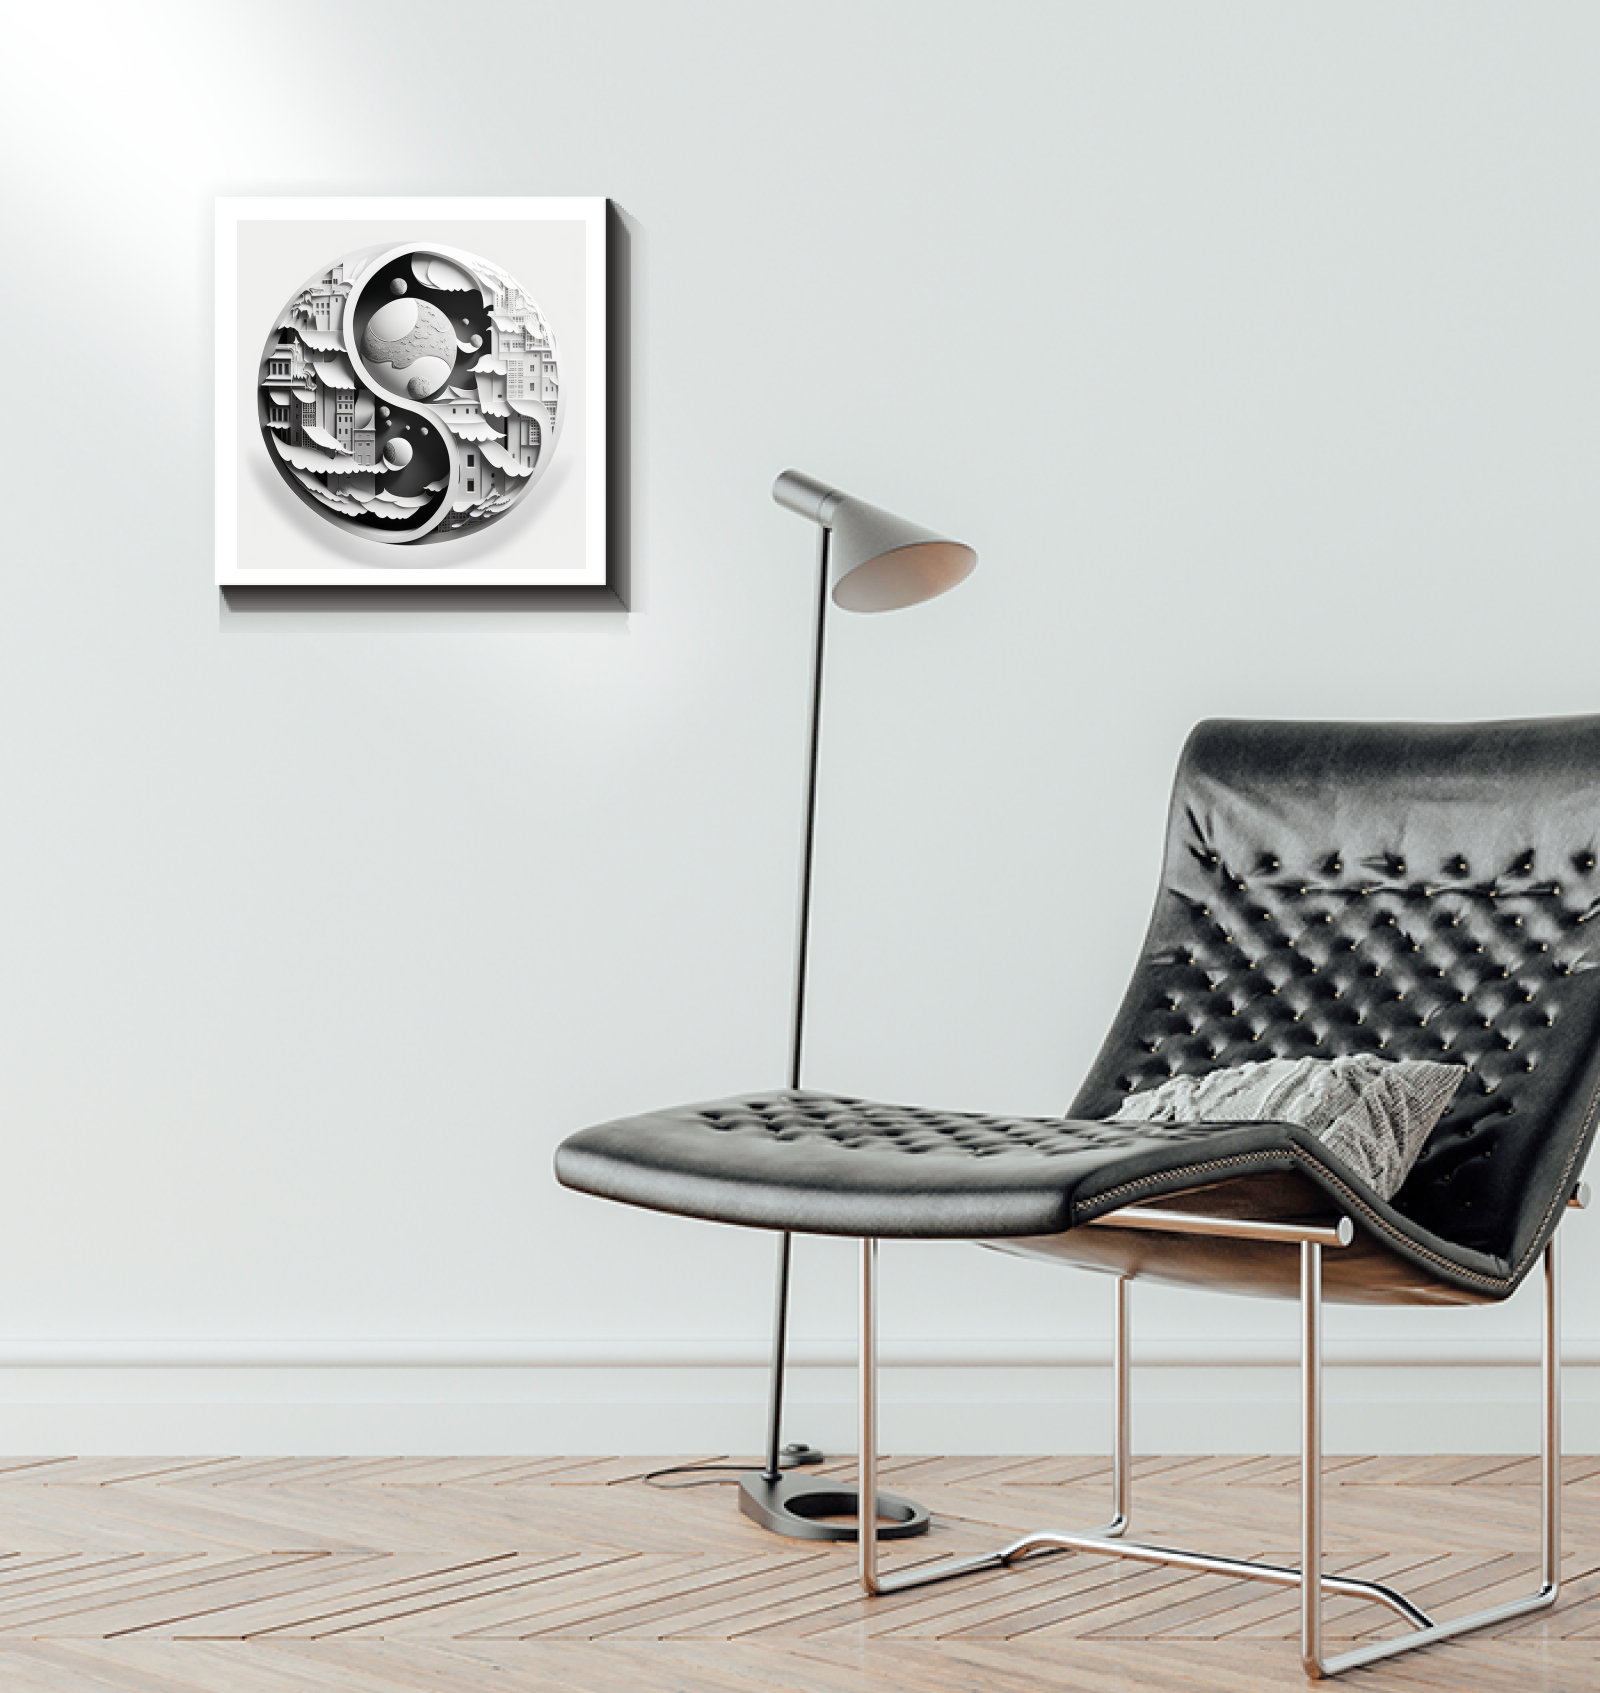 Artistic Swirl and Still canvas for modern decor.